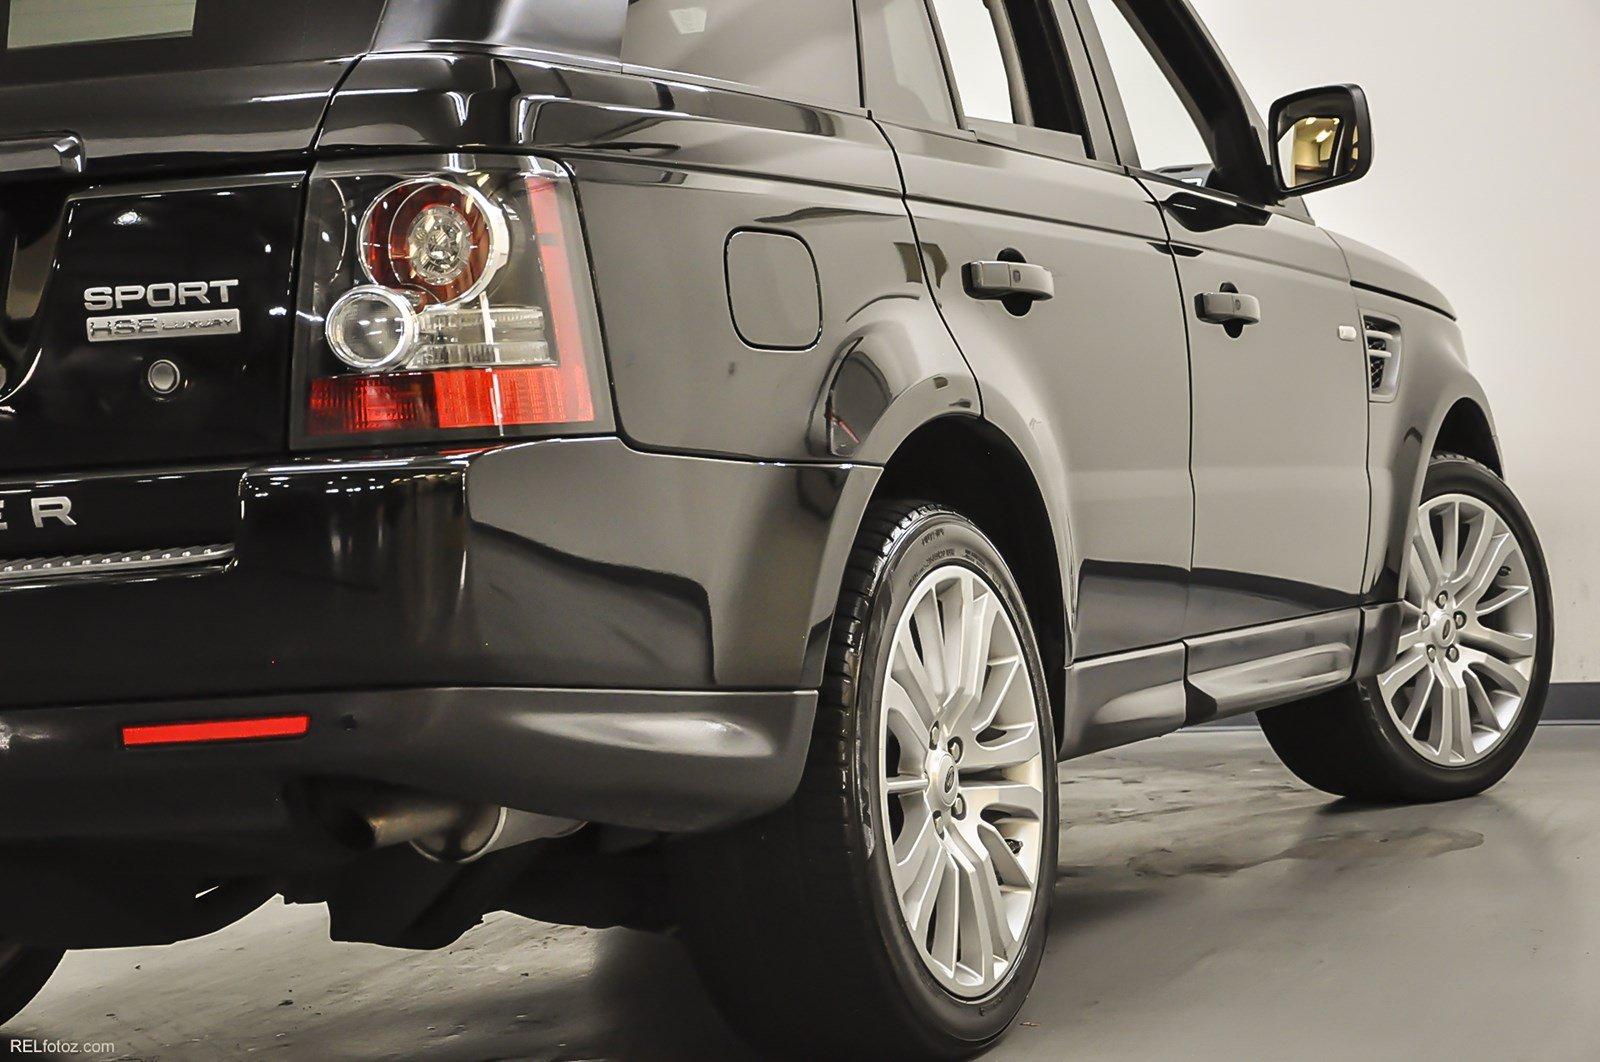 Used 2011 Land Rover Range Rover Sport HSE LUX for sale Sold at Gravity Autos Marietta in Marietta GA 30060 7